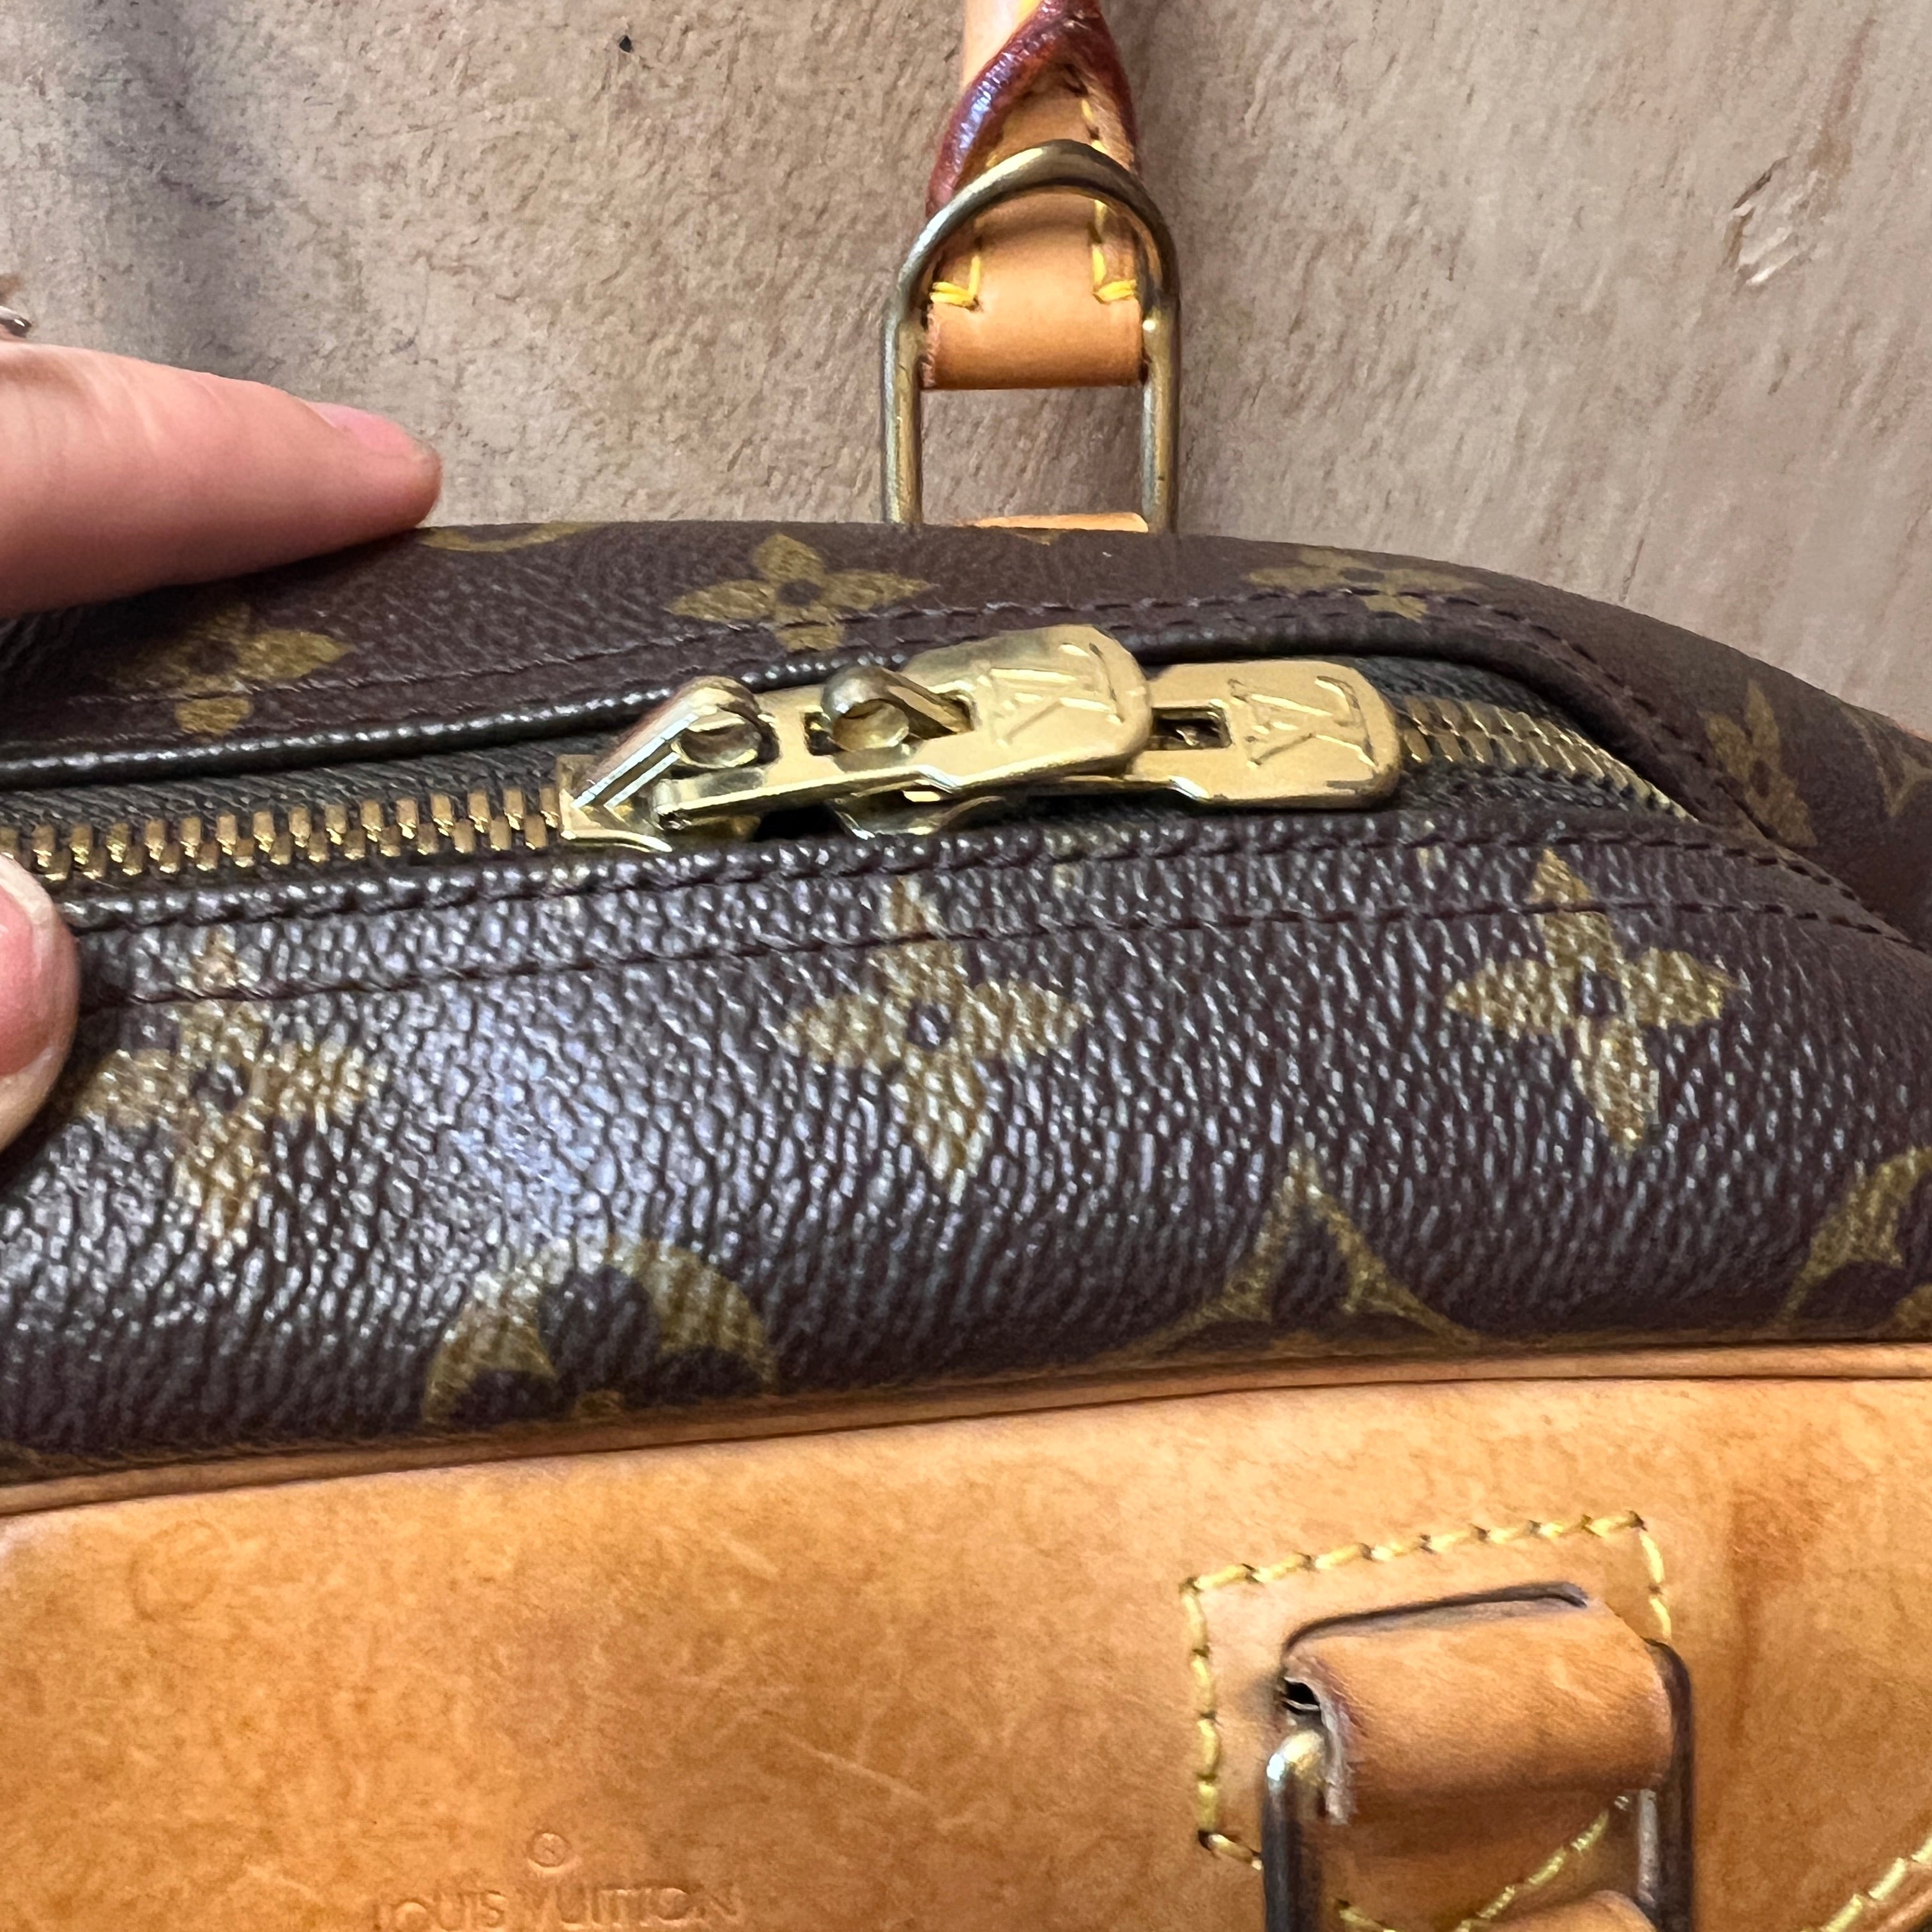 LOUIS VUITTON vintage briefcase bag – Wellington Hunters and Collectors